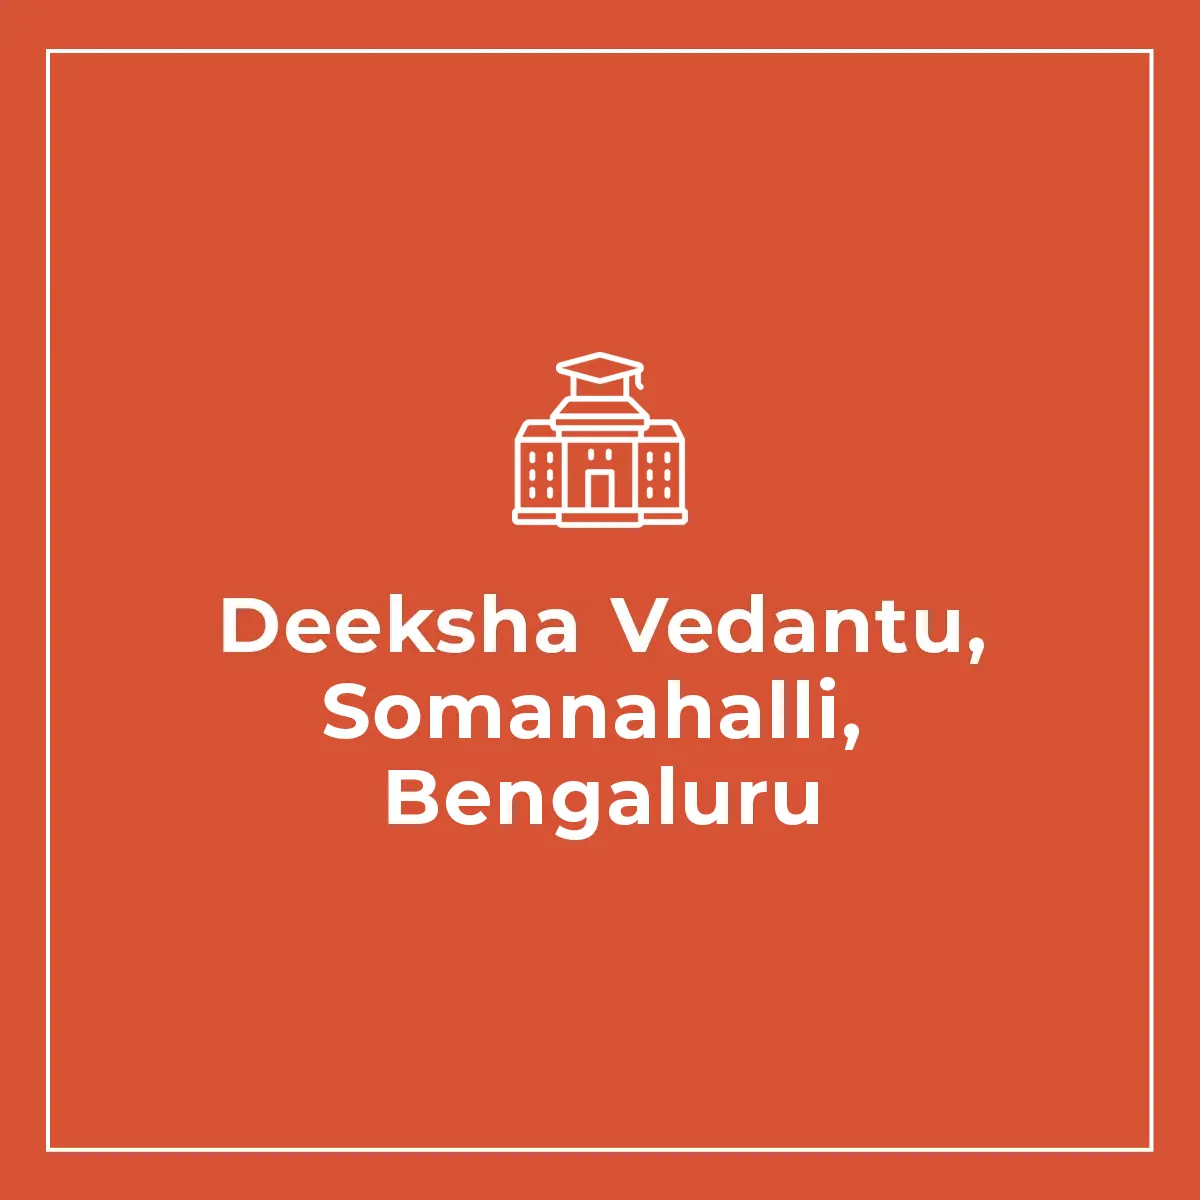 Deeksha Vedantu @Edify School, Somanahalli, Bengaluru